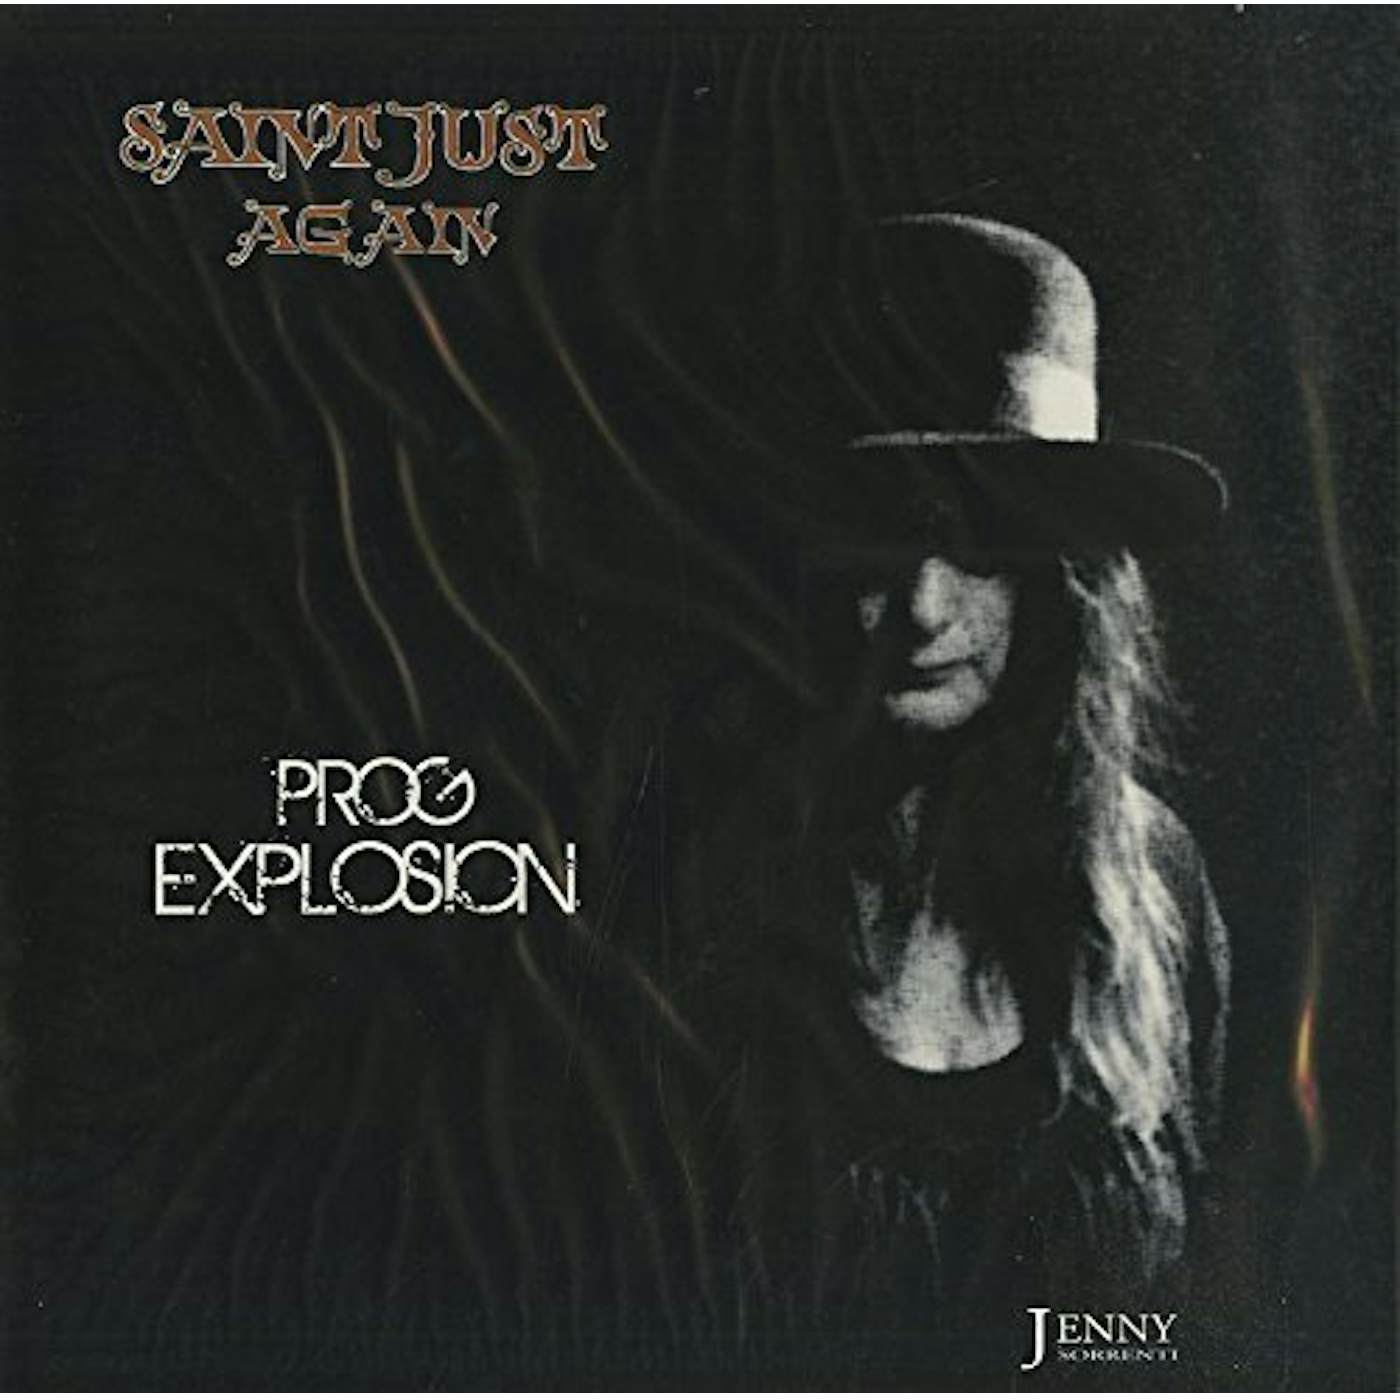 Saint Just PROG EXPLOSION Vinyl Record